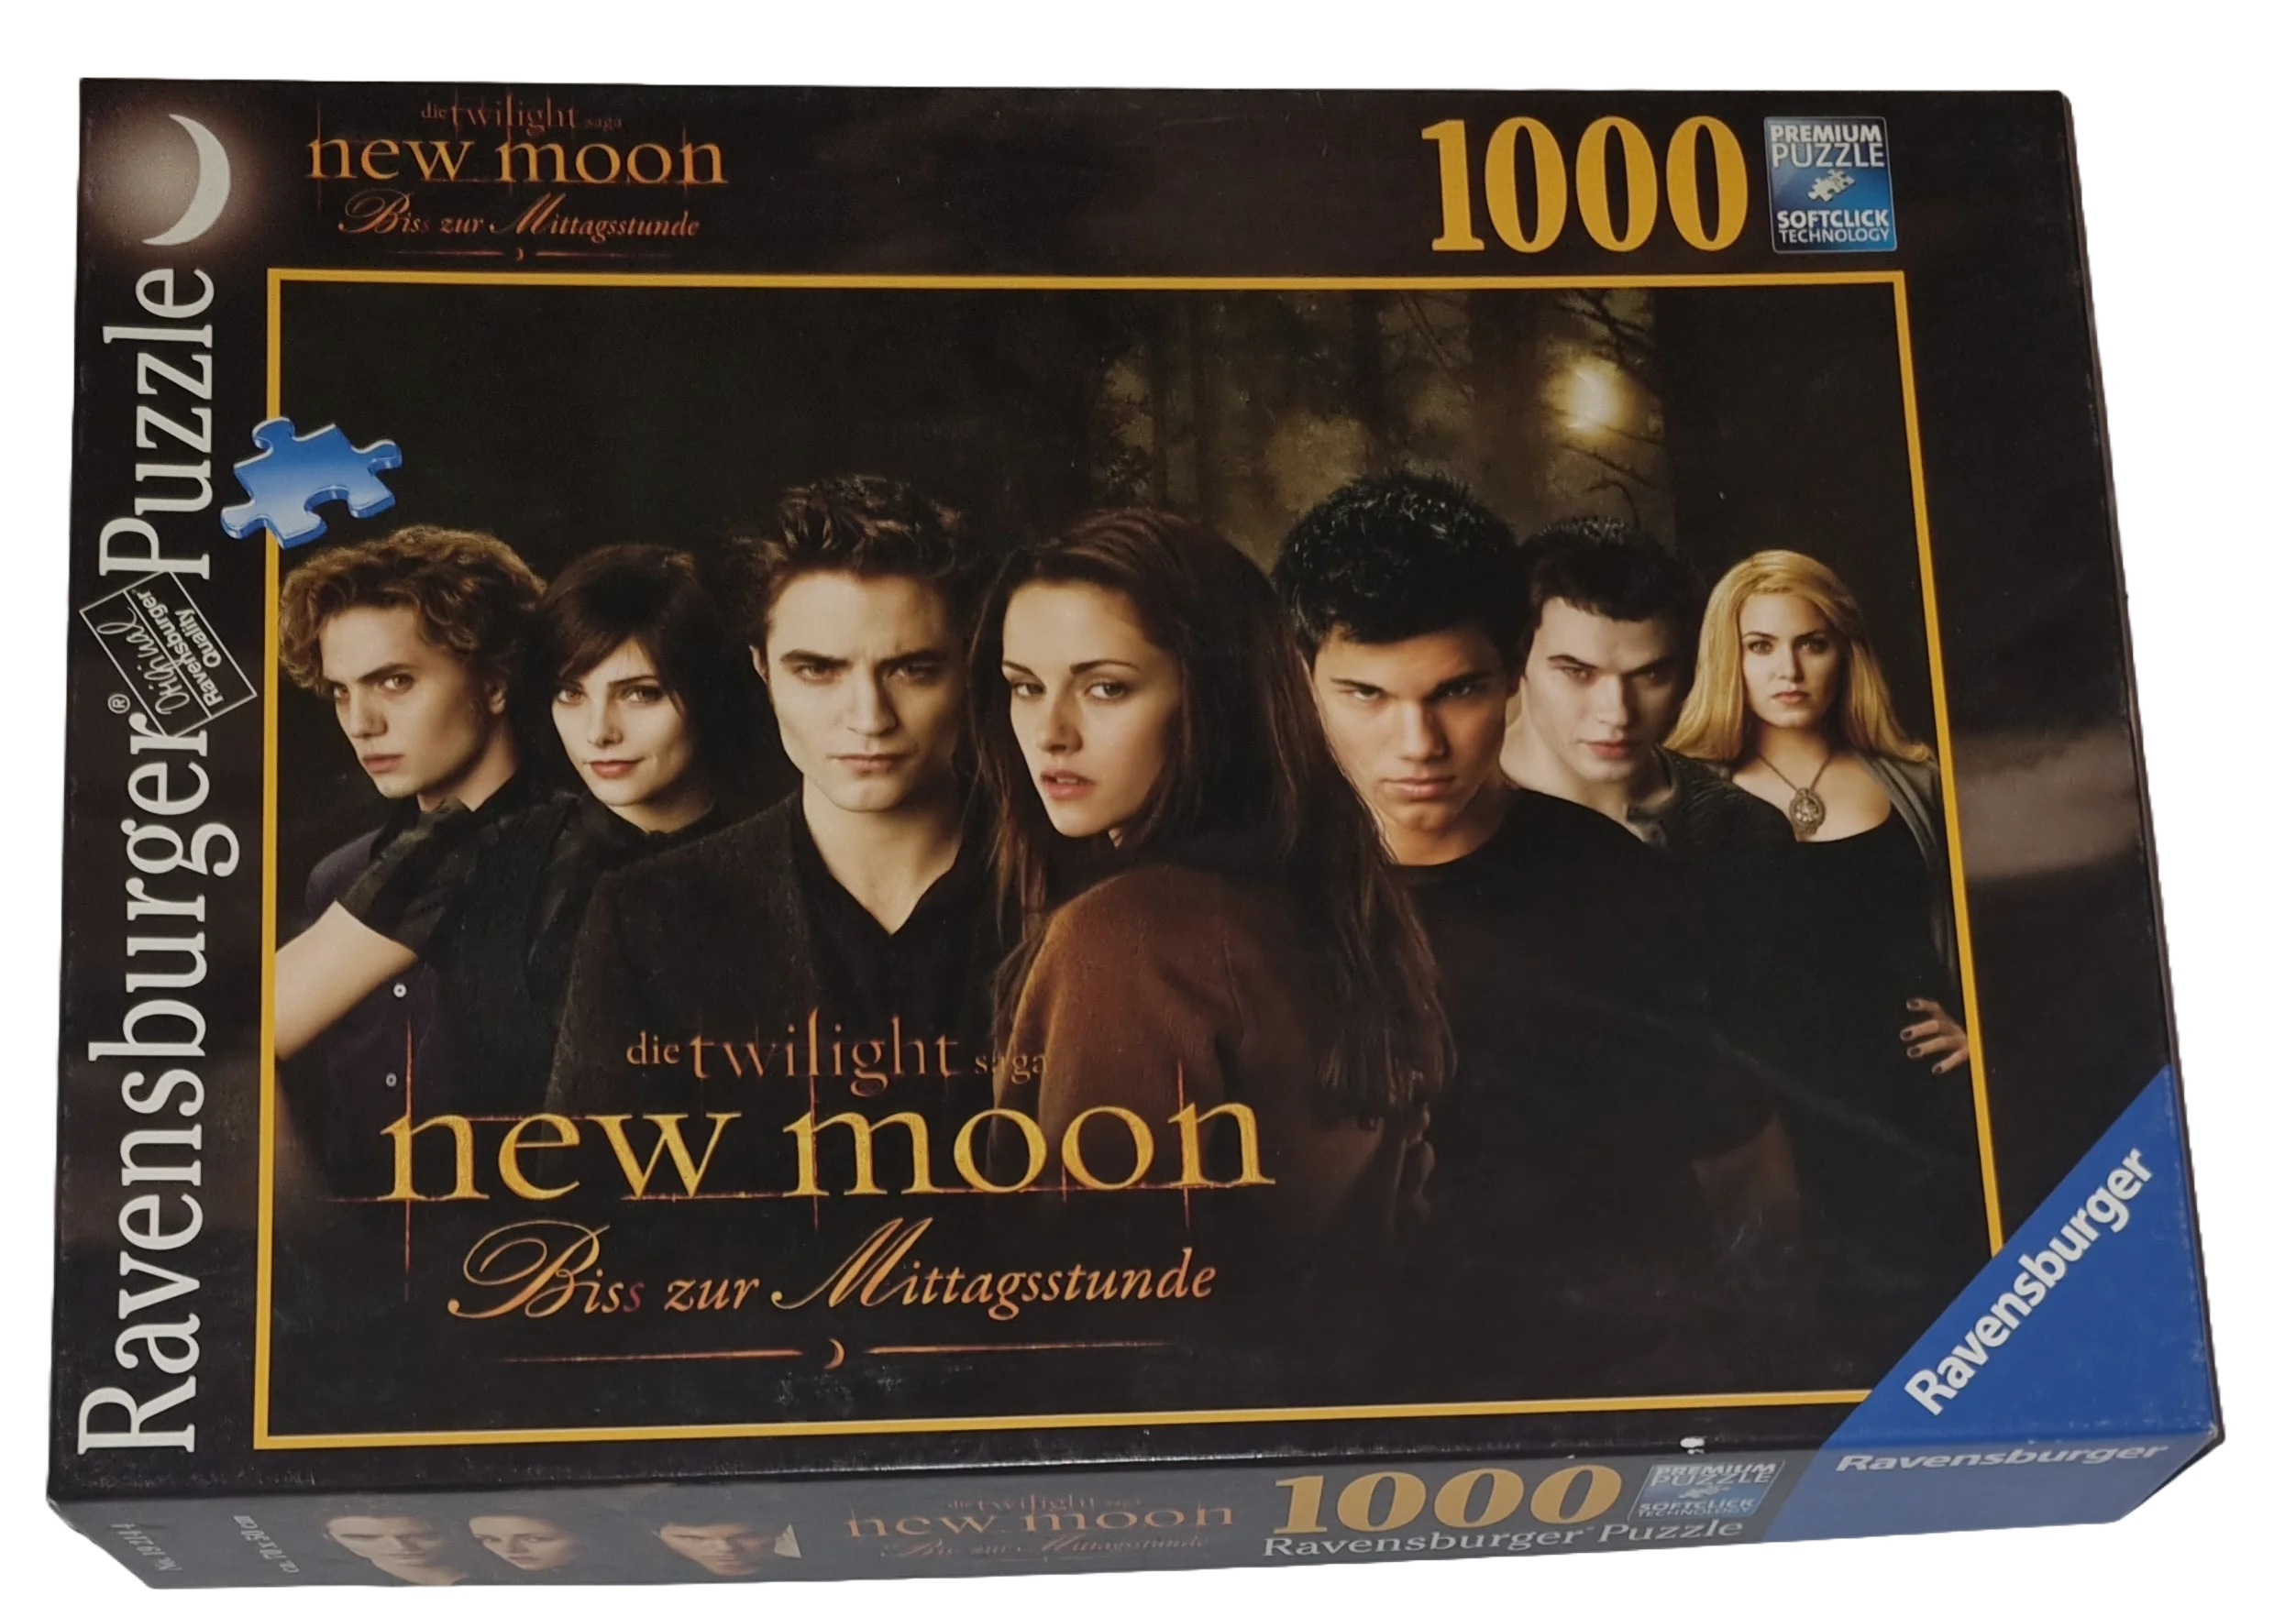 Ravensburger Puzzle Premium softclick 1000 Teile die twilight saga new moon 192144